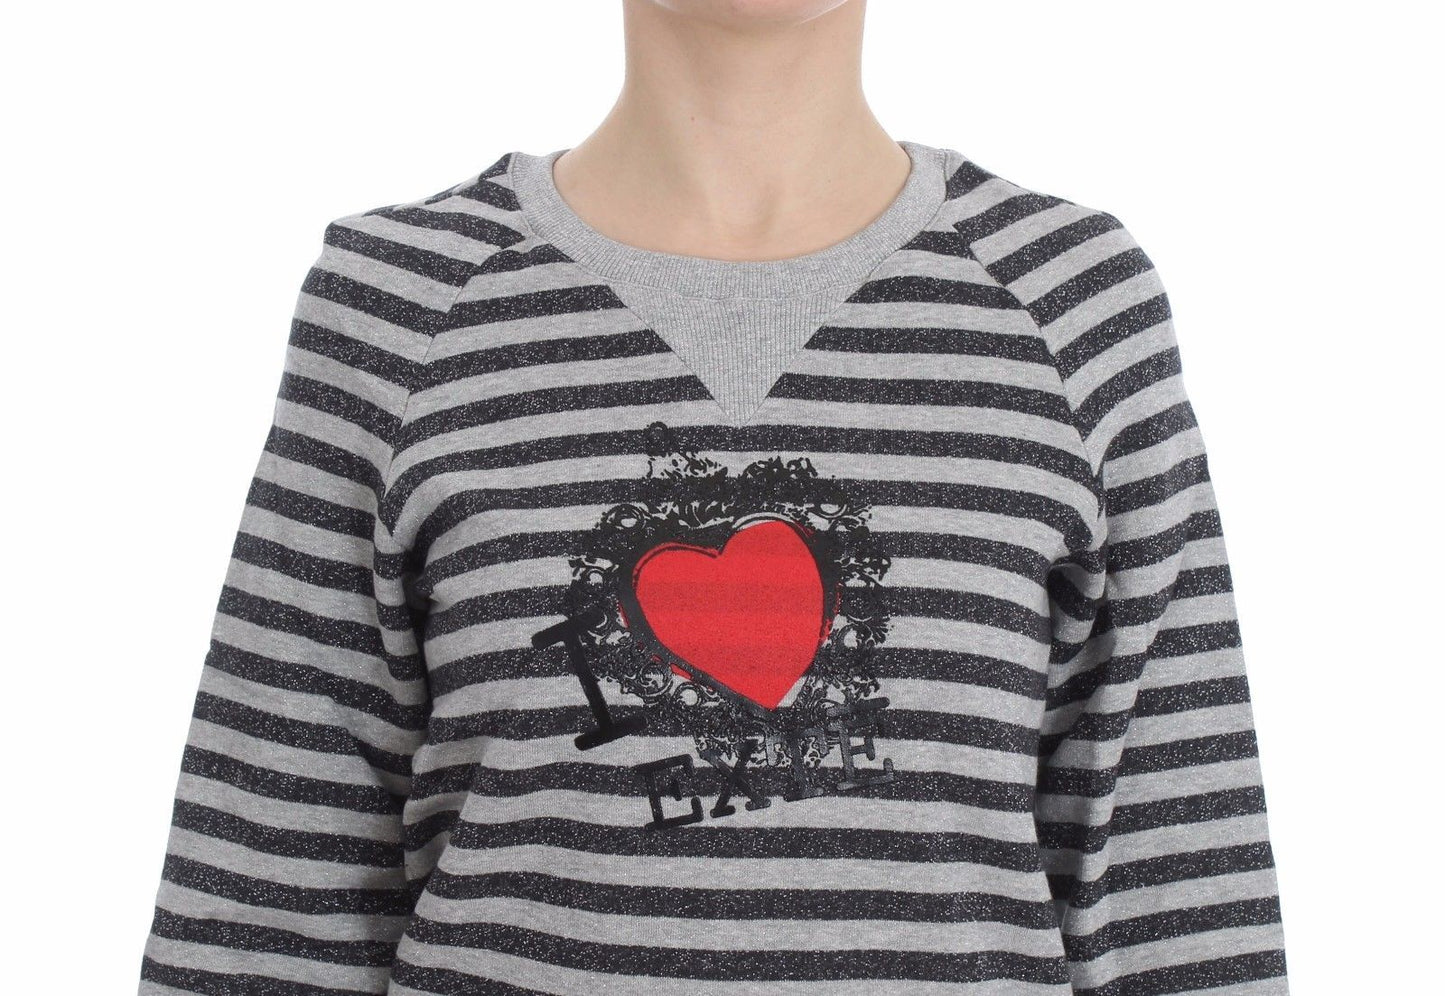 Exte Chic Gray Striped Crew-Neck Sweater